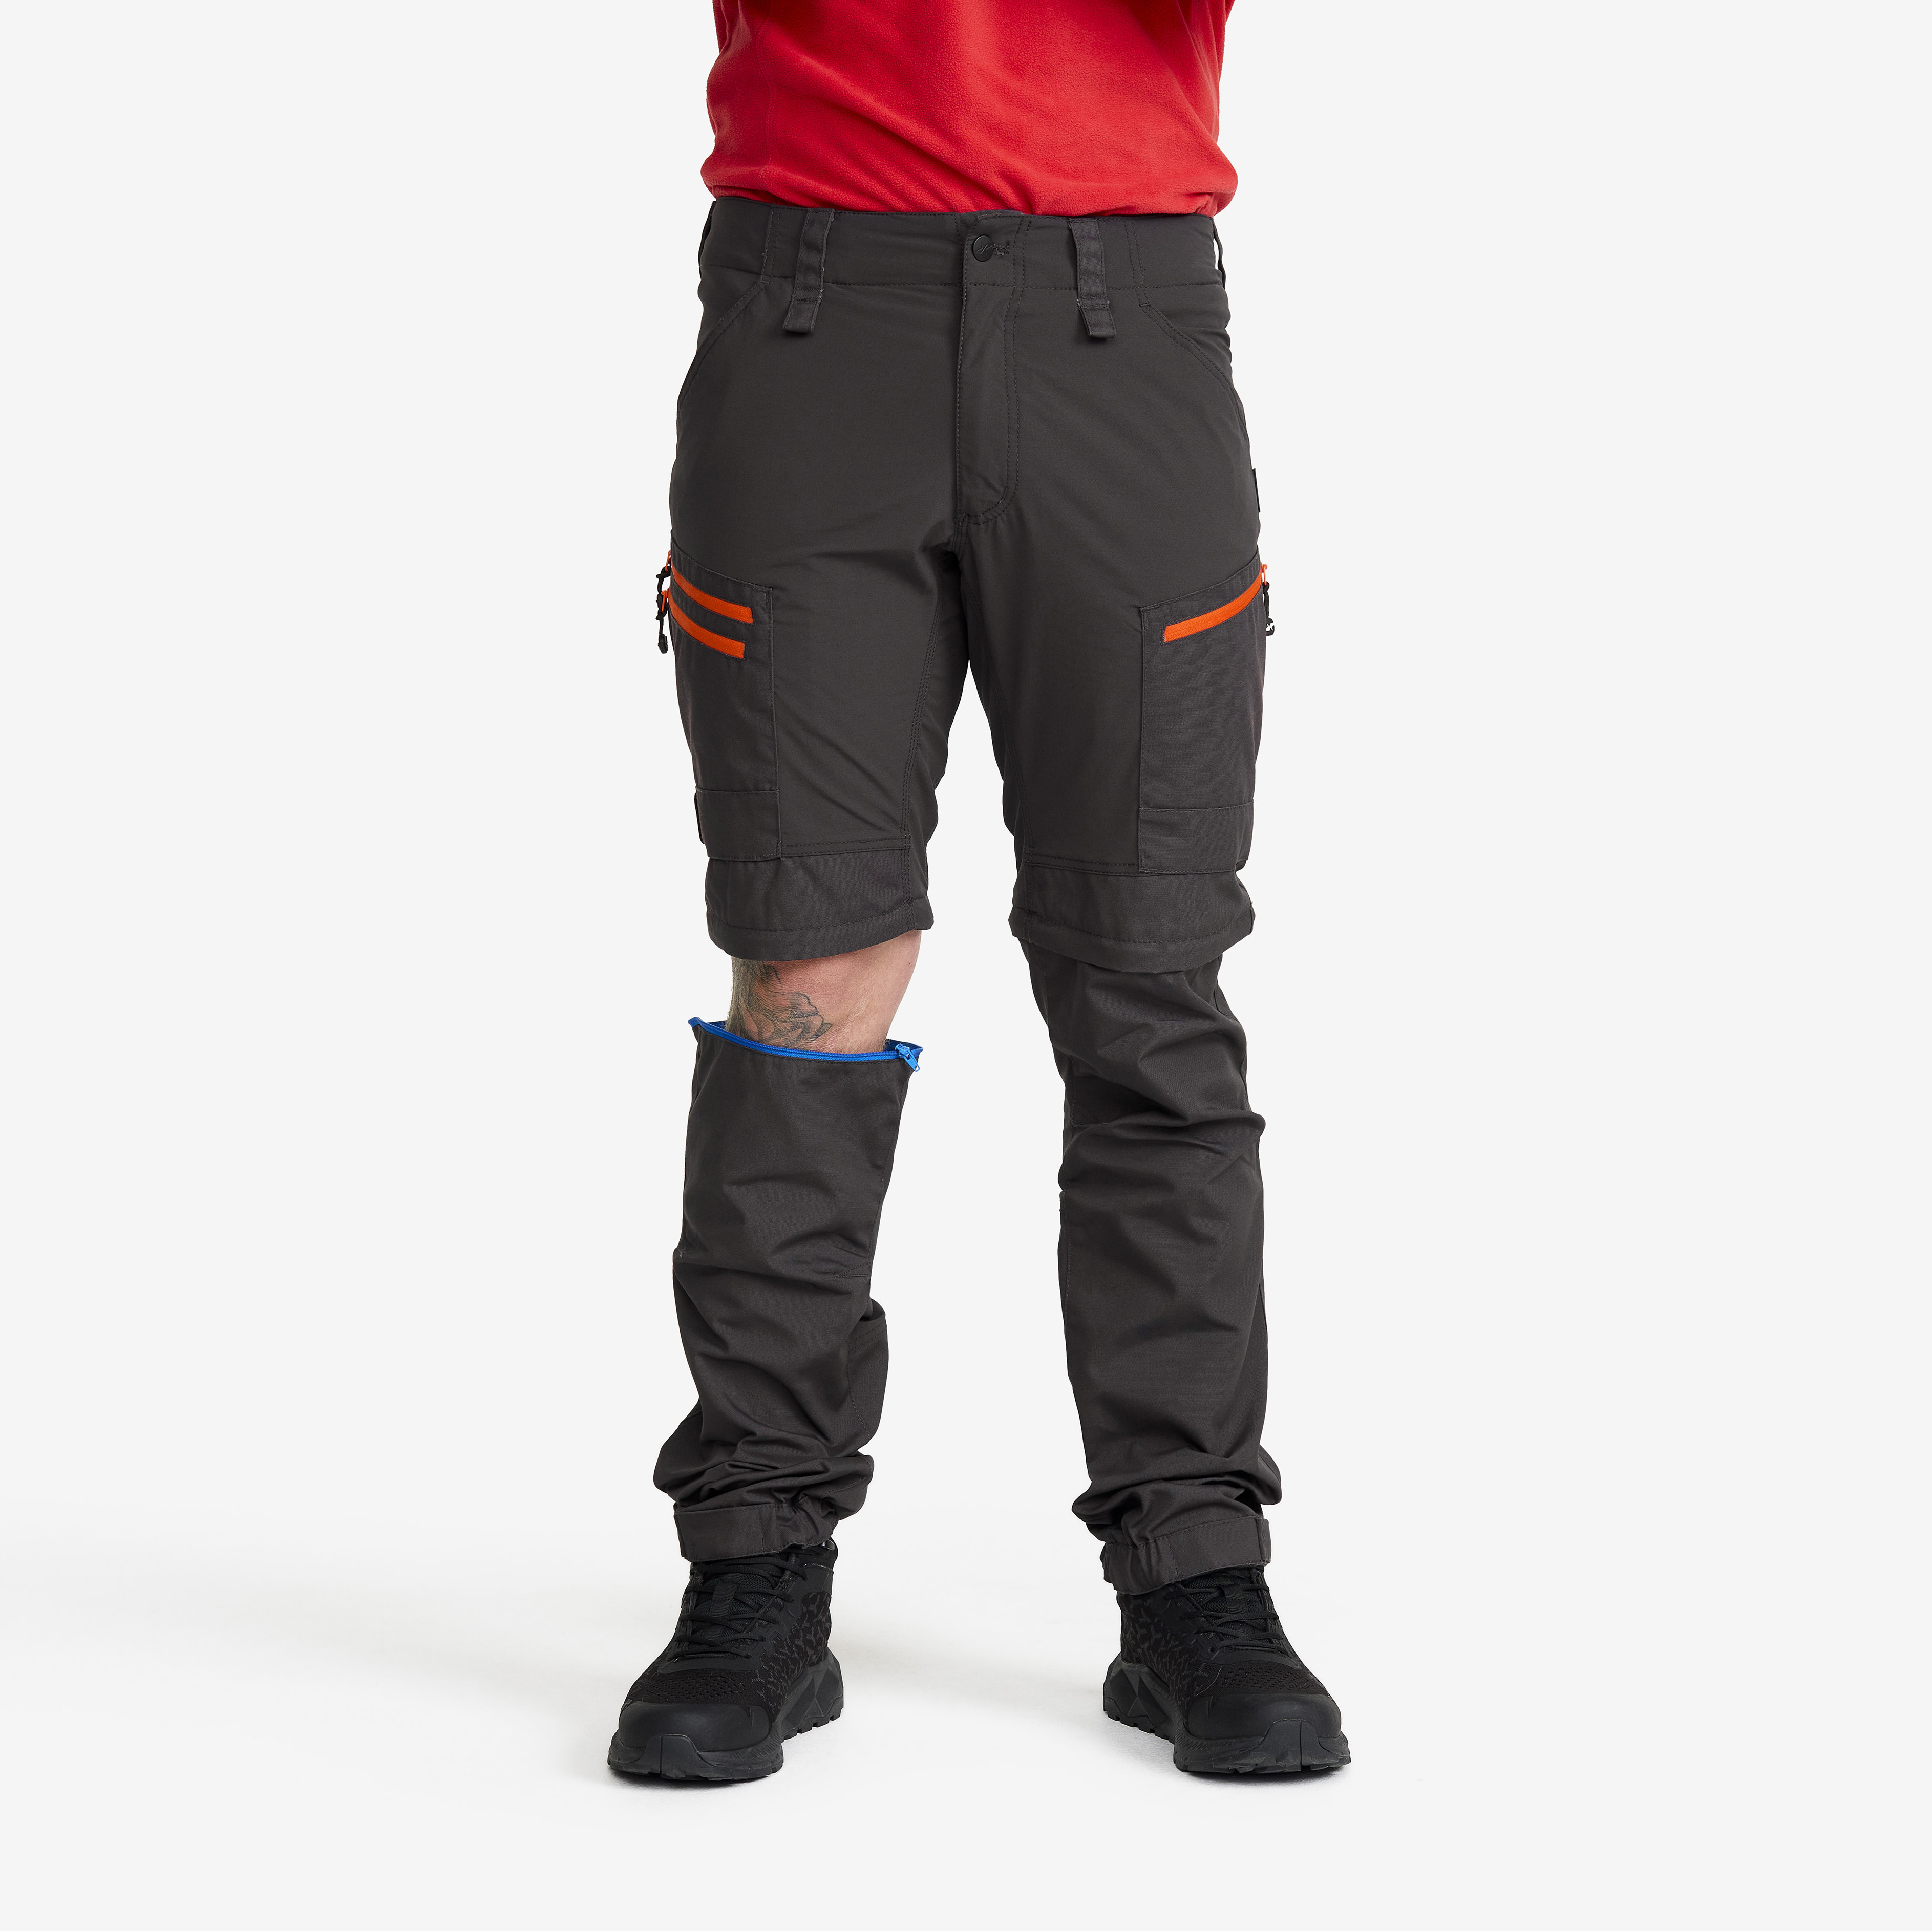 RVRC GP Pro Zip-off spodnie trekkingowe męskie ciemno szary